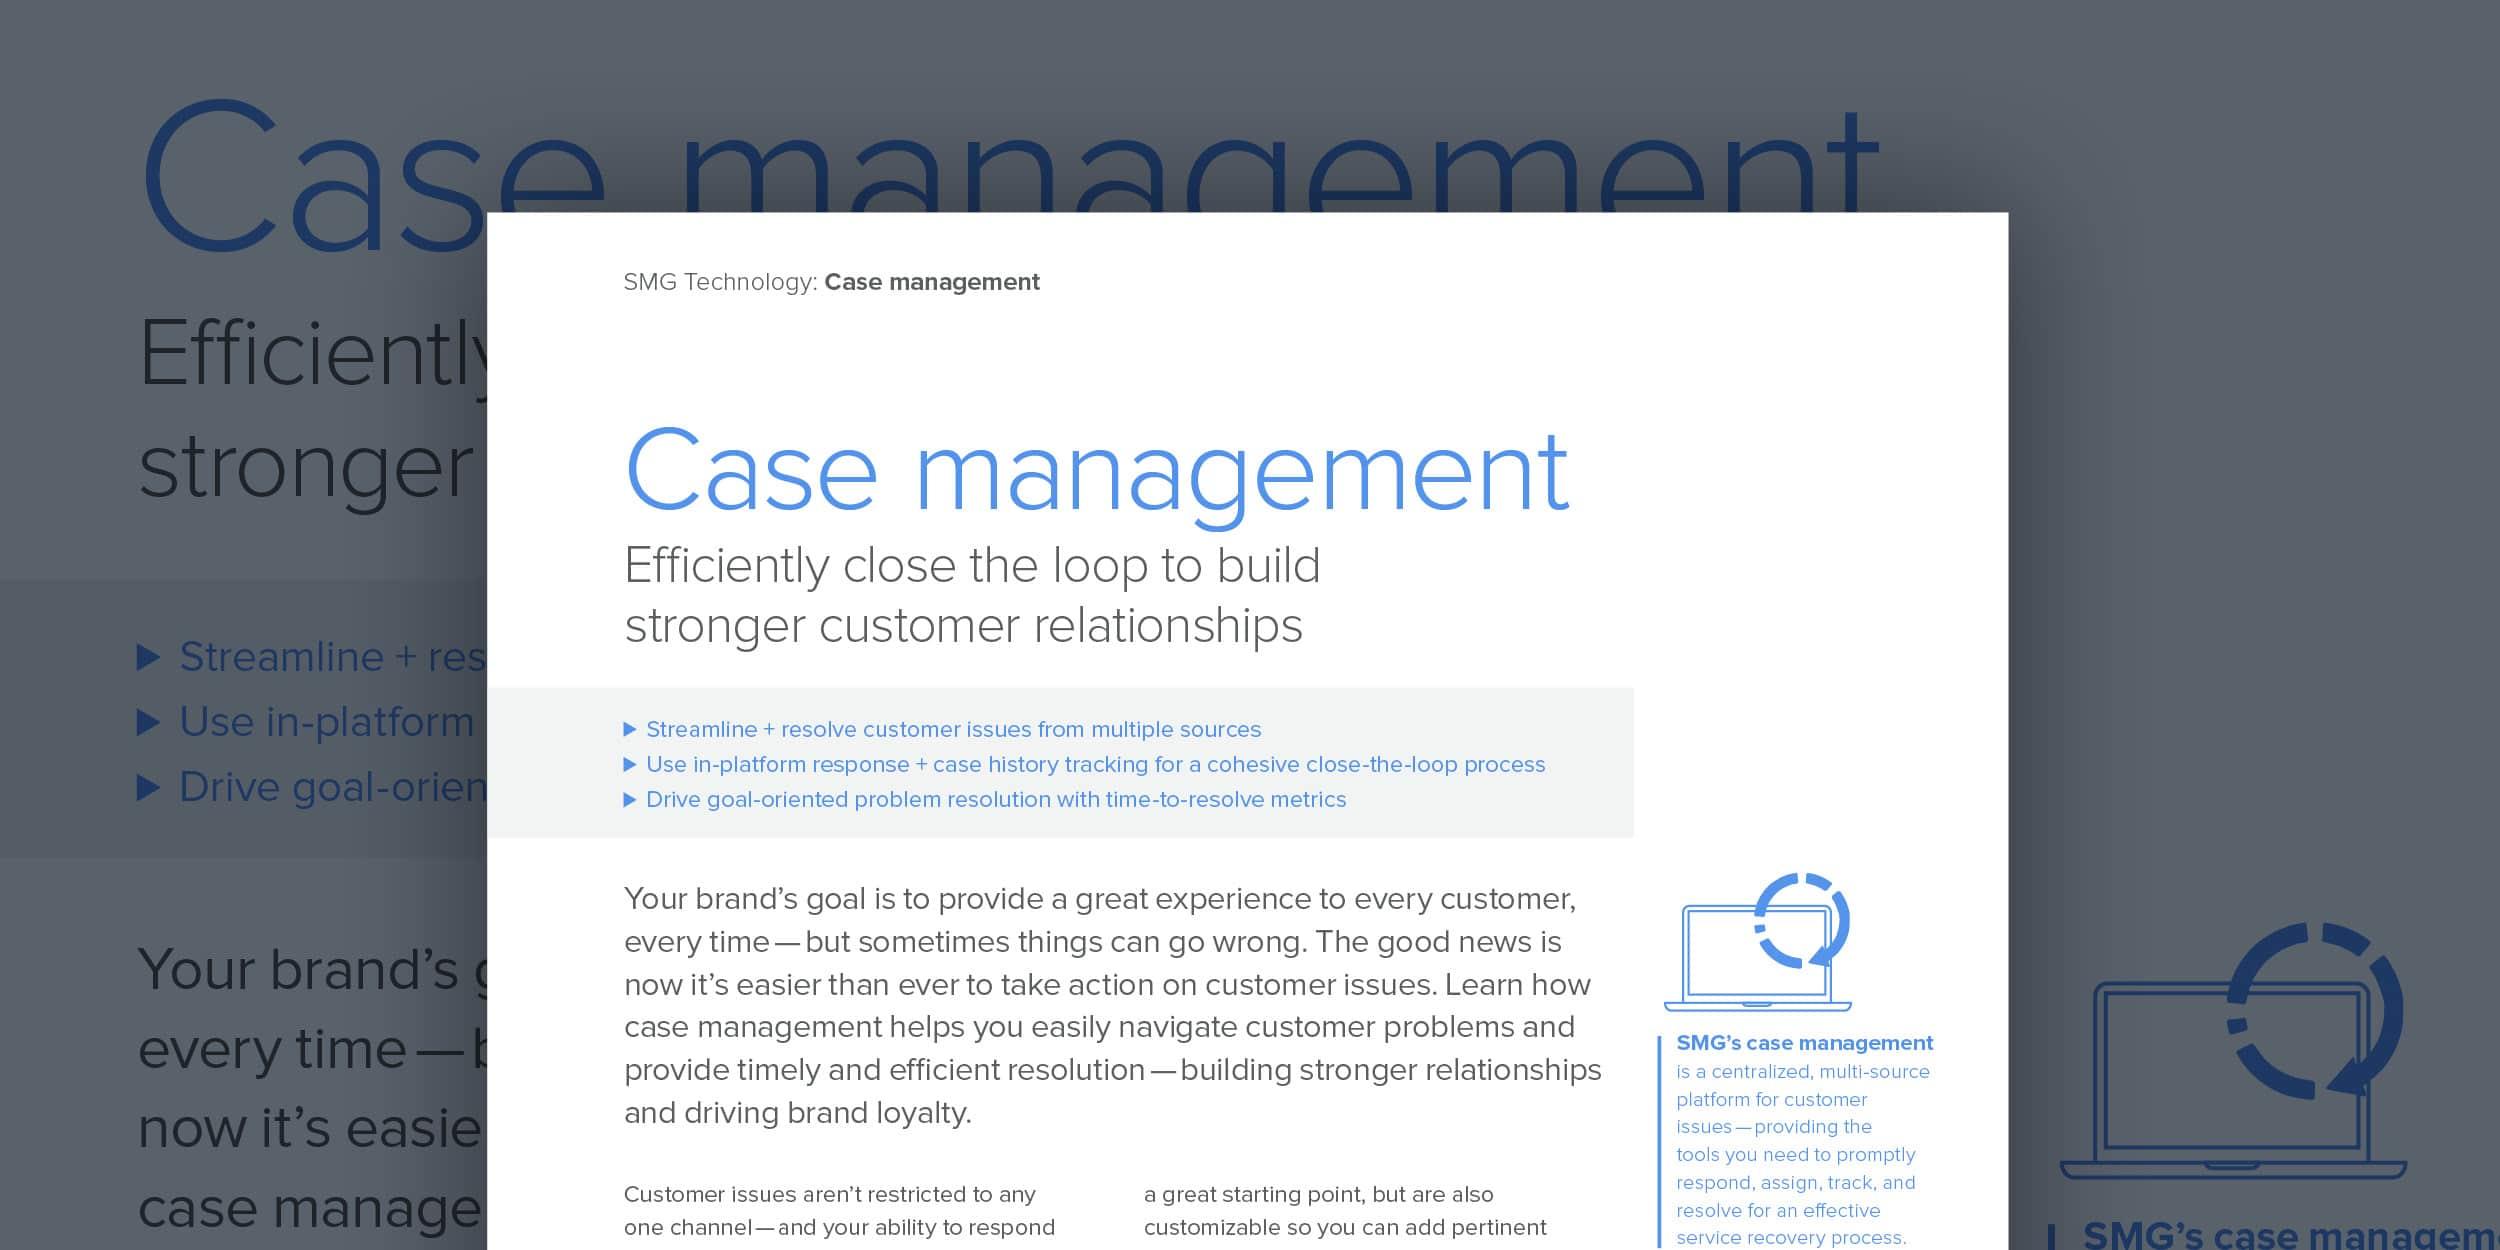 Product Case management - SMG image